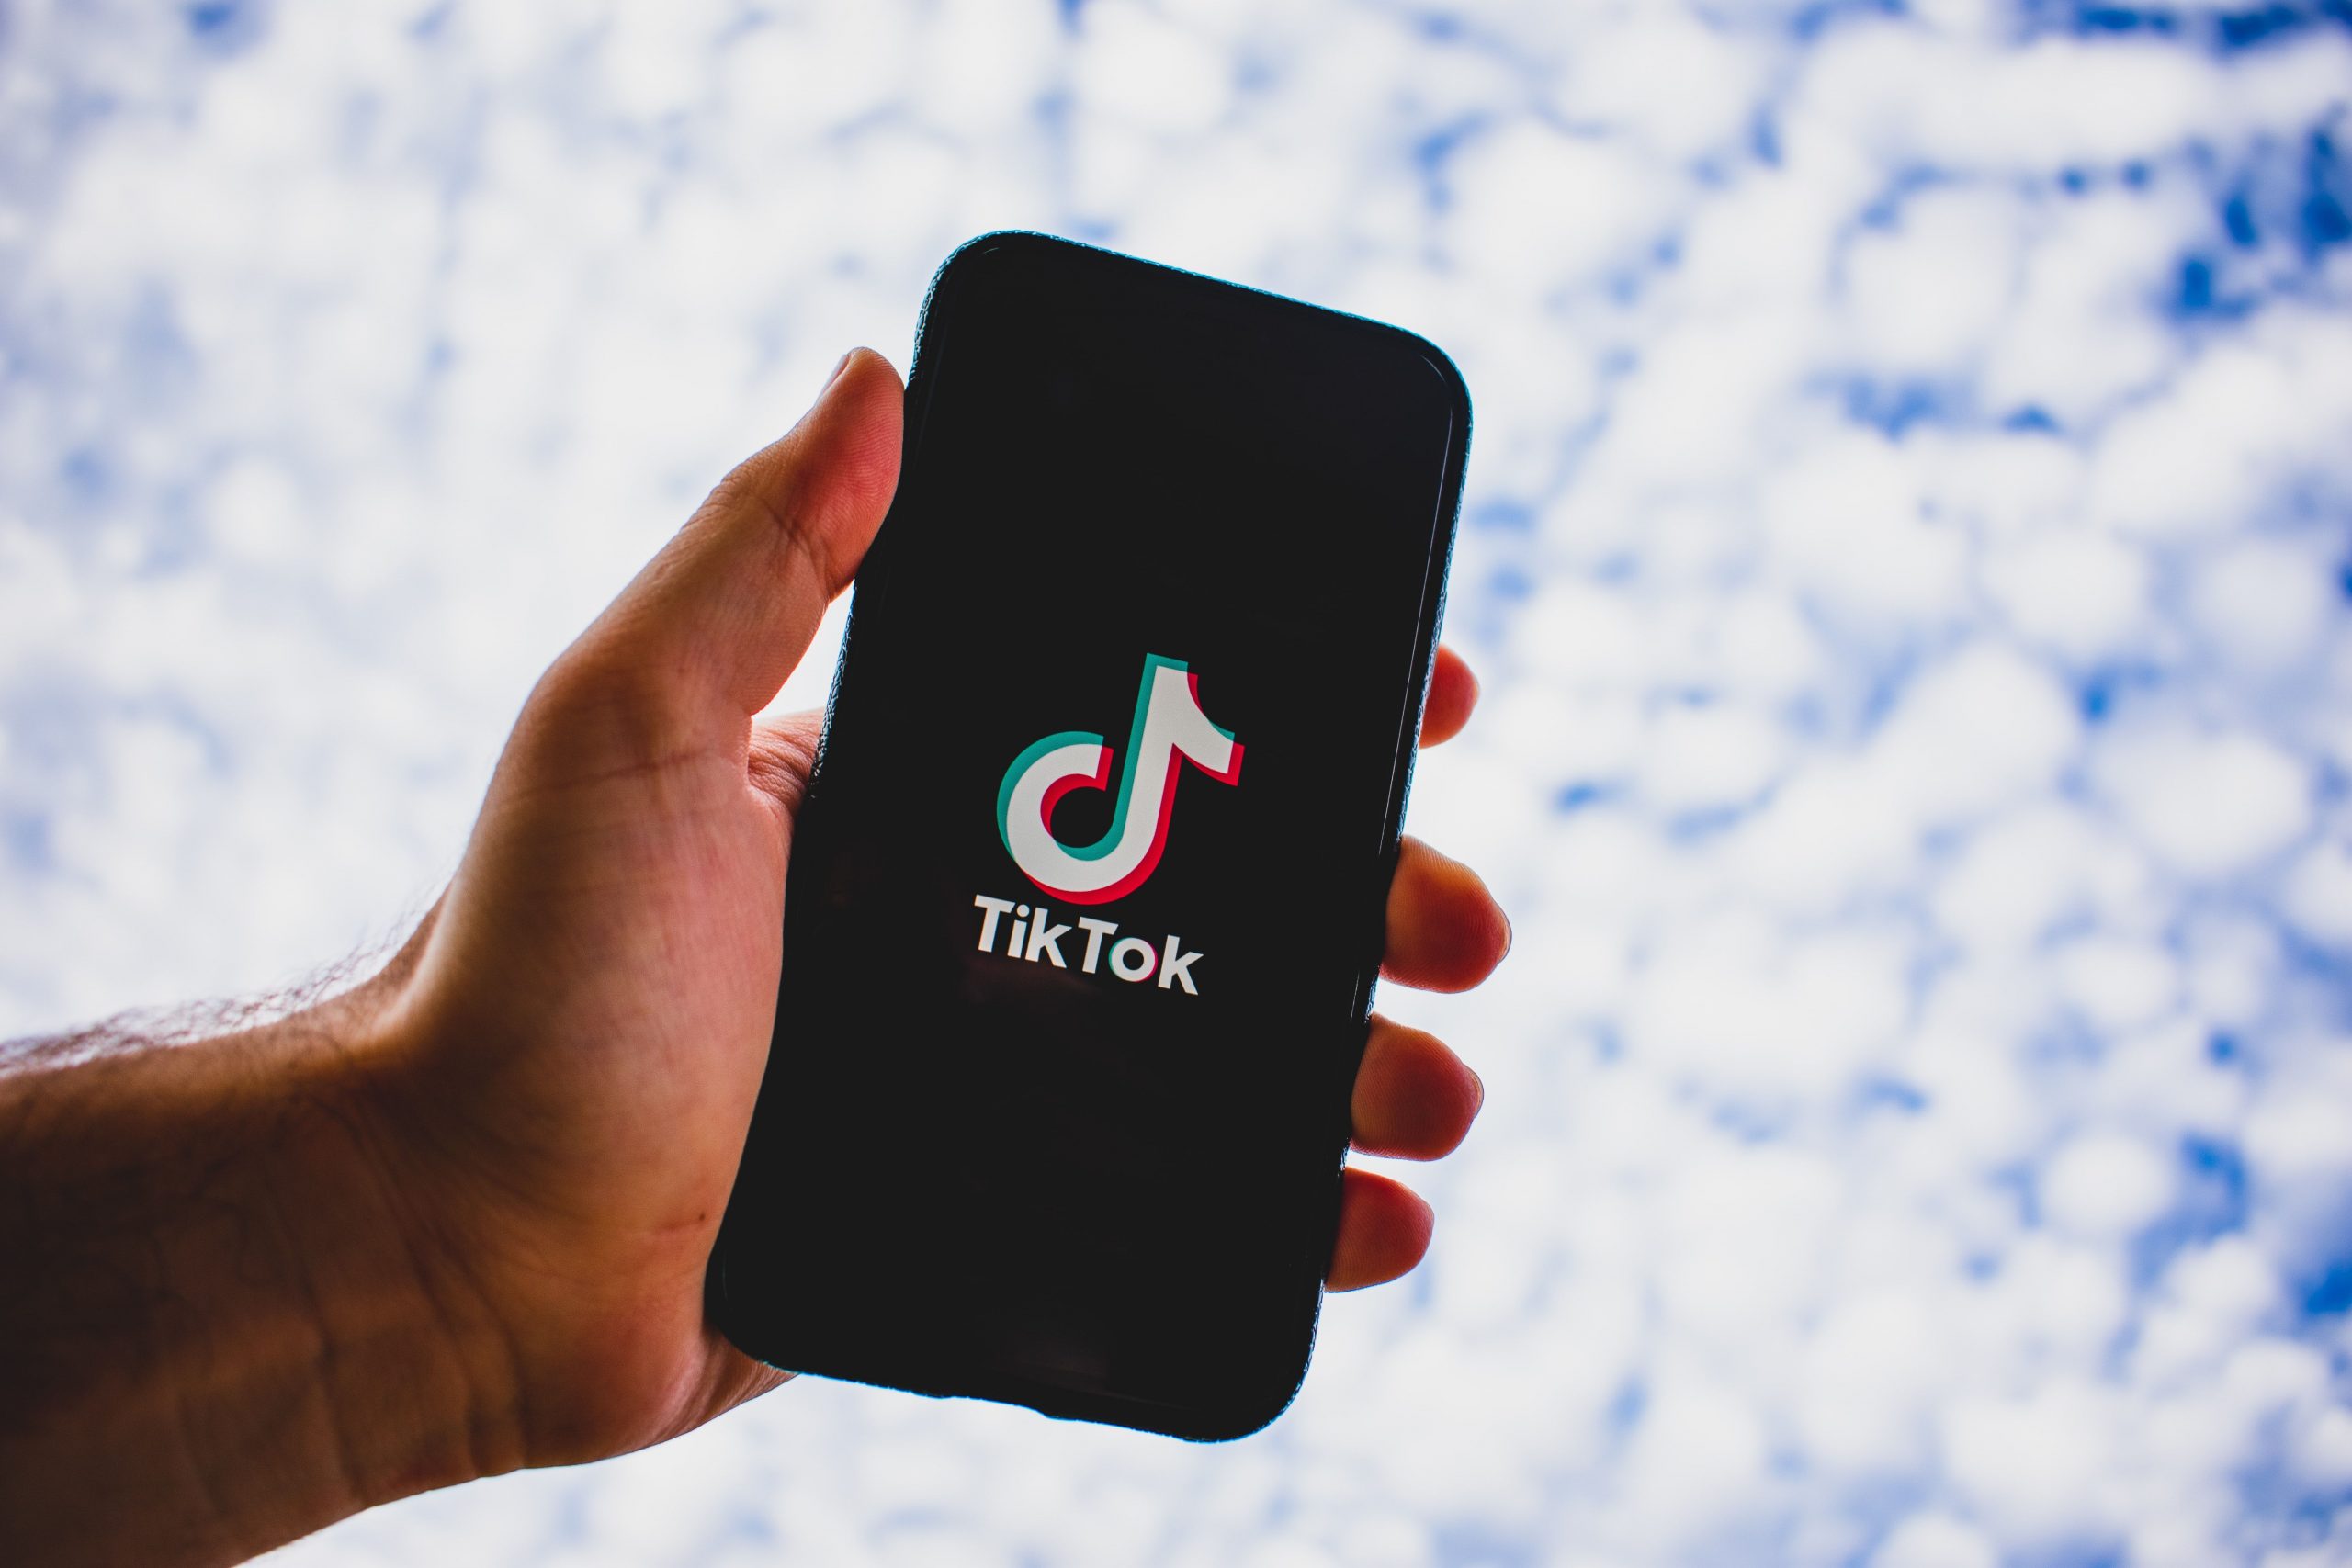 TikTok beats Facebook to become most downloaded app in 2020: Report